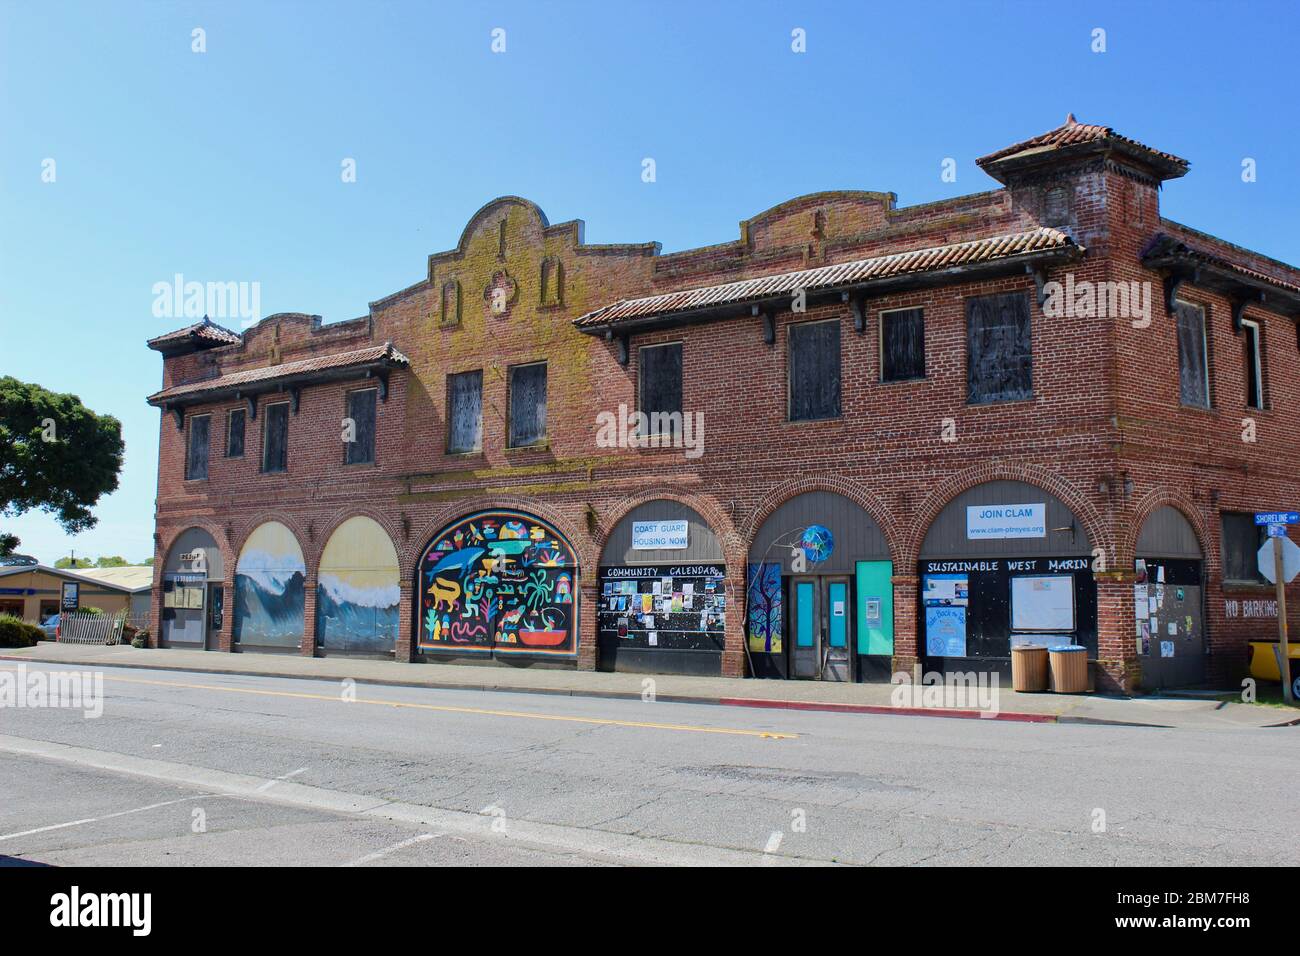 Grandi Building, Point Reyes Station, California Stock Photo